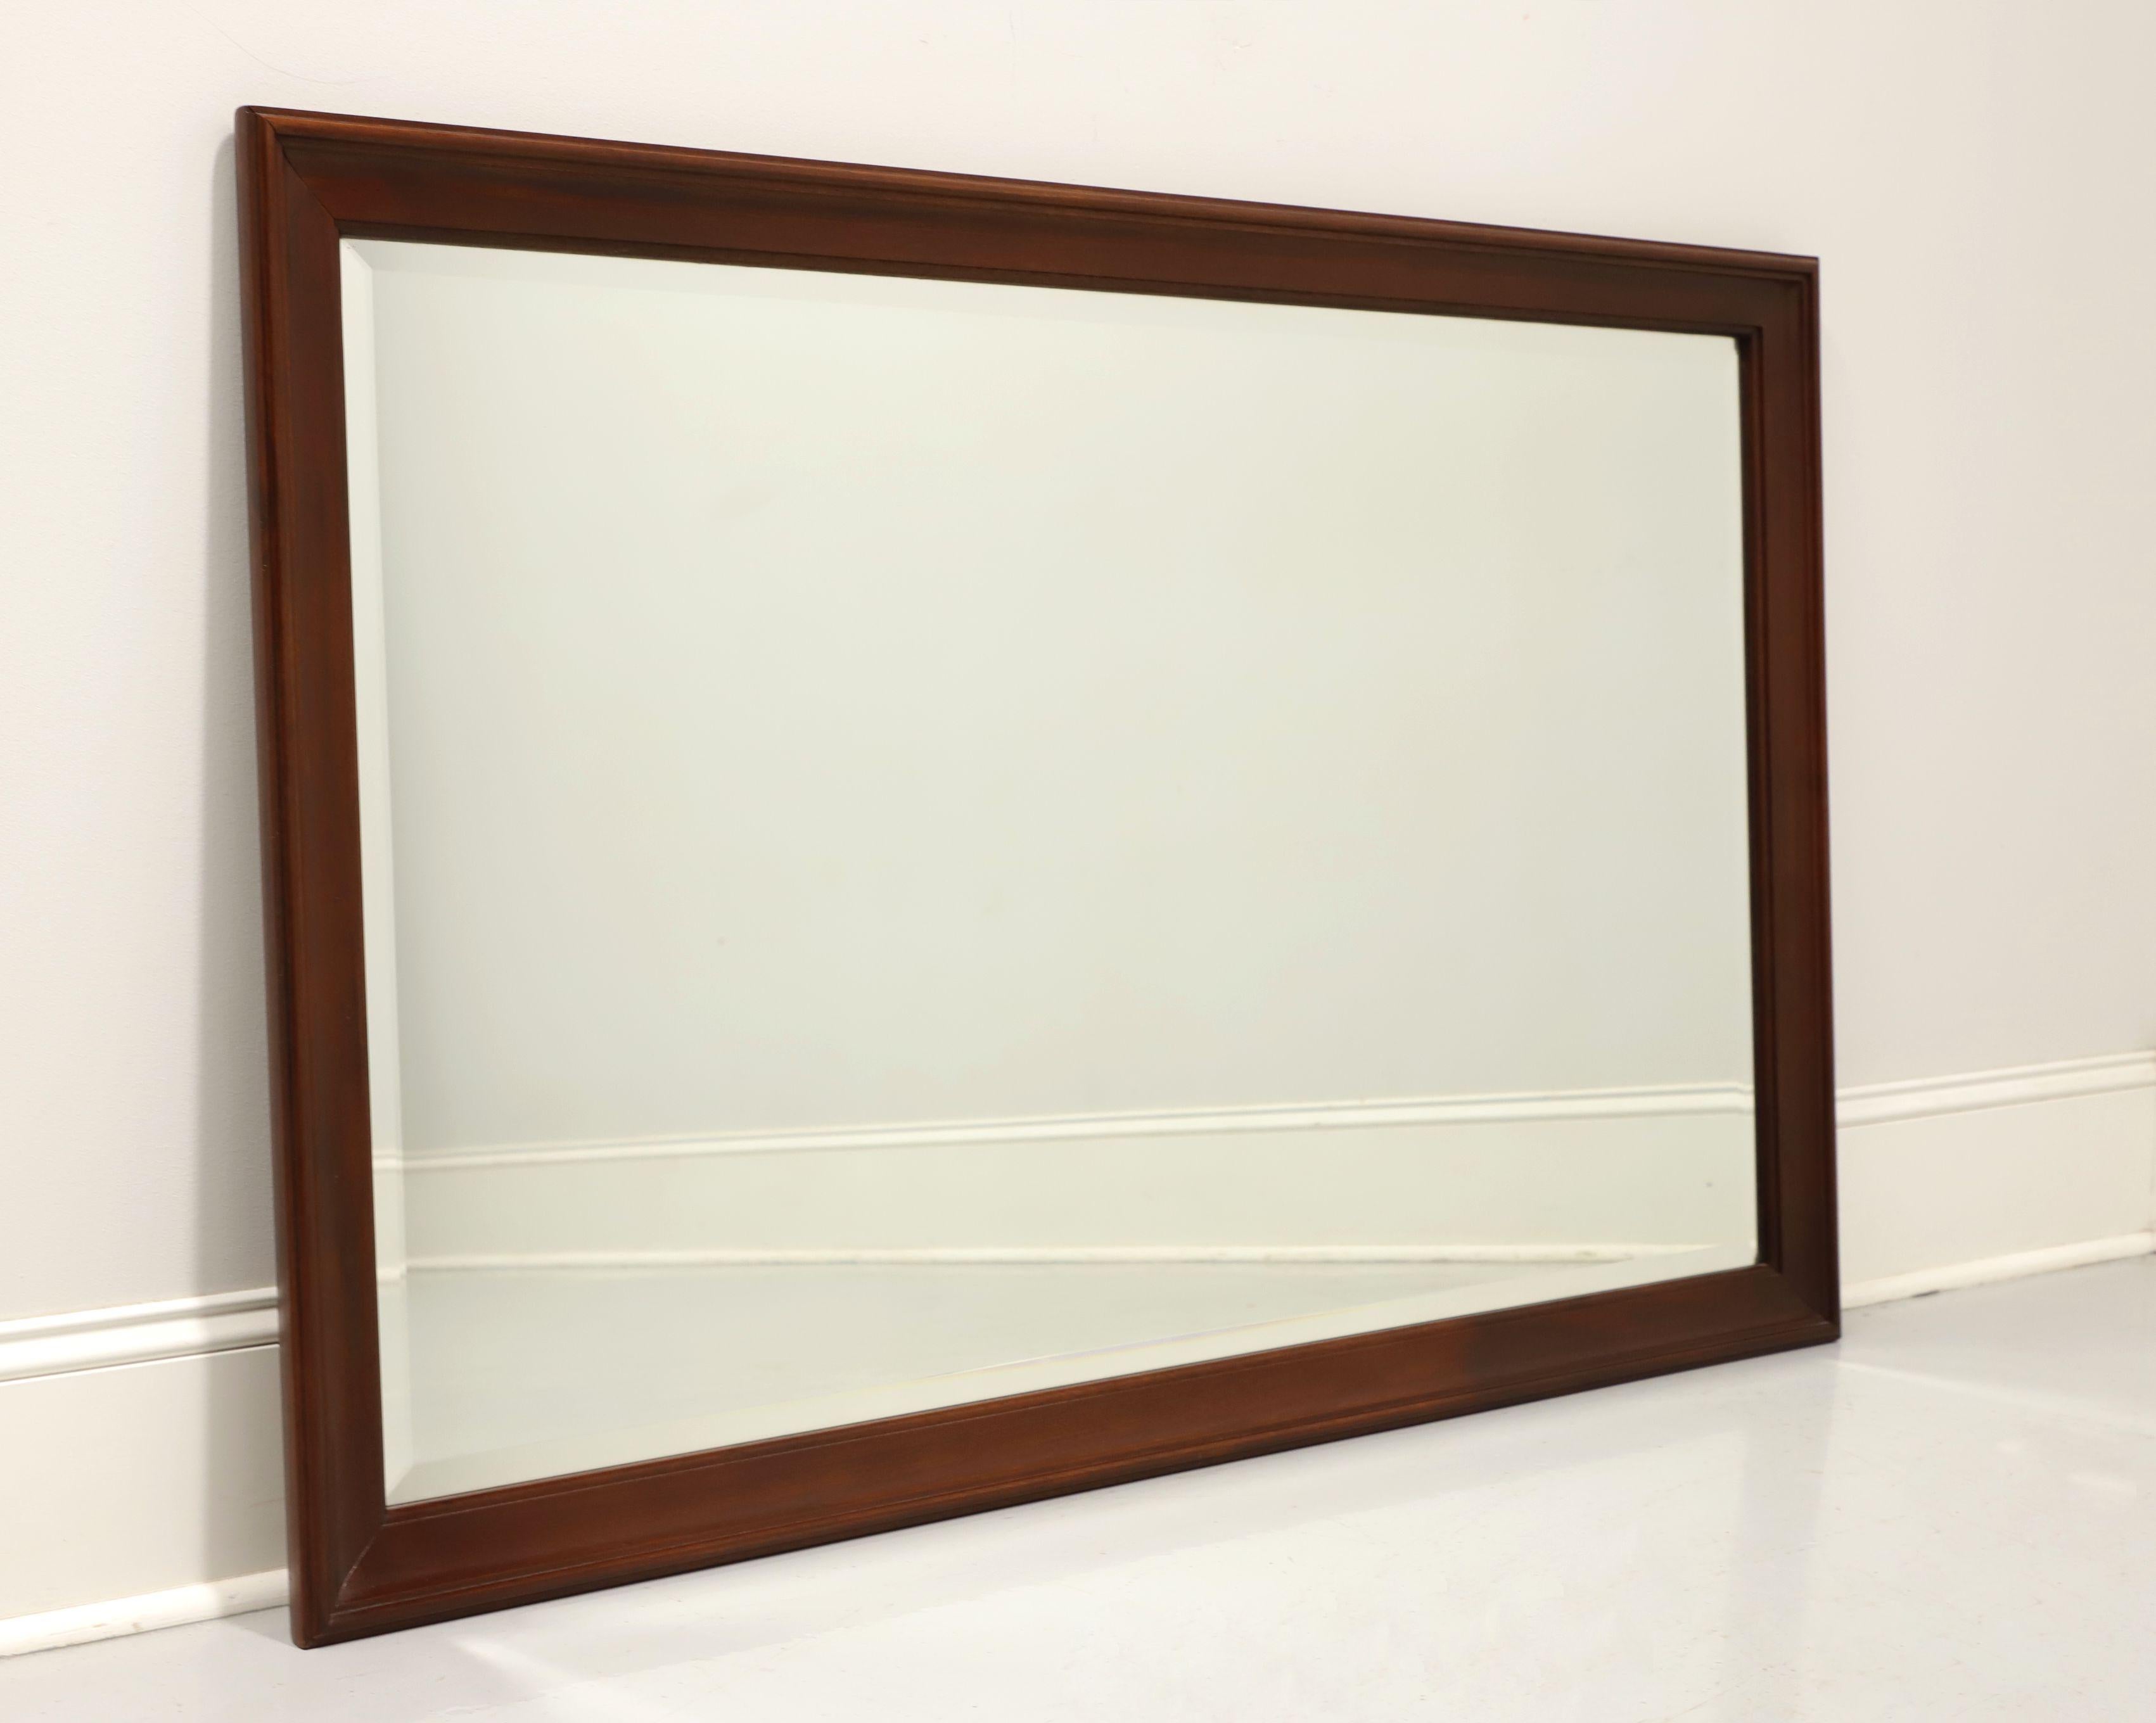 CRAFTIQUE Mellowax Solid Mahogany Rectangular Beveled Dresser / Wall Mirror 1